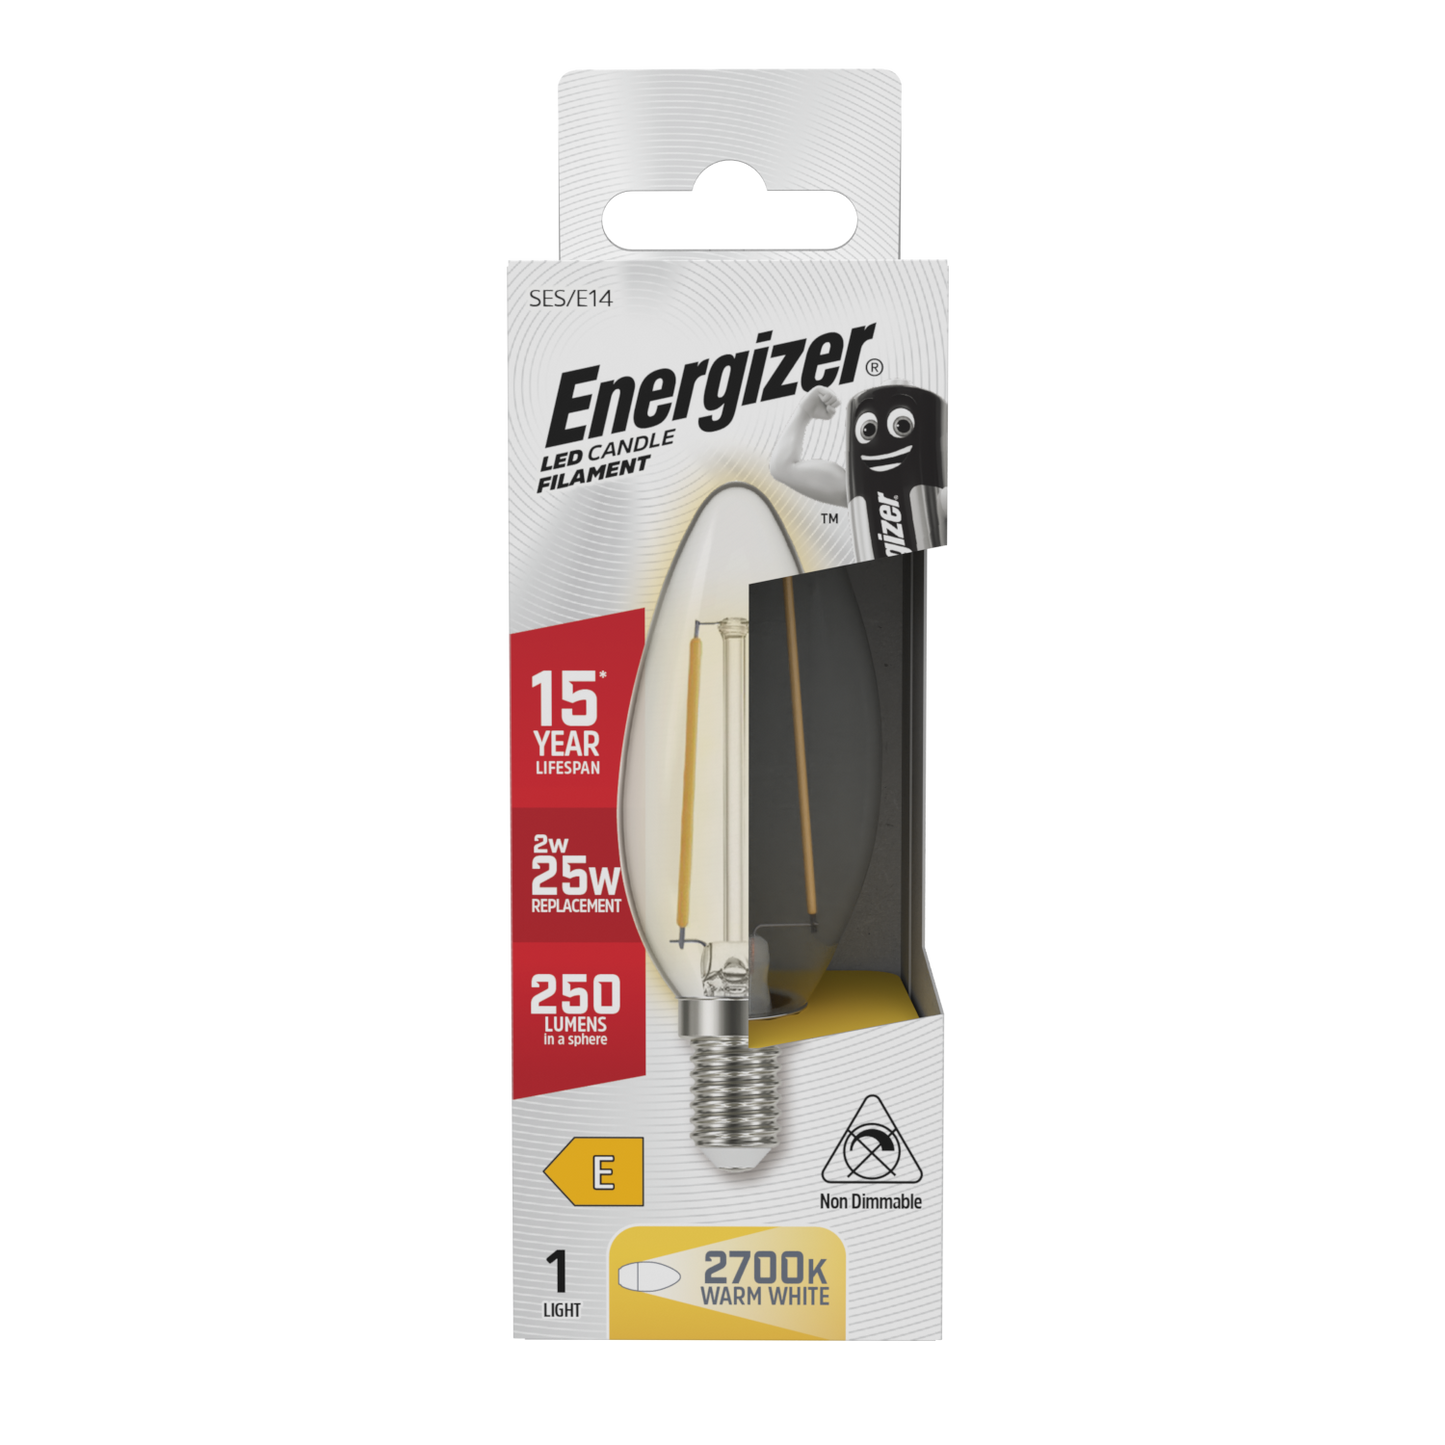 Energizer LED Filament Candle E14 (SES) 250lm 2W 2,700K (Warm White), Box of 1